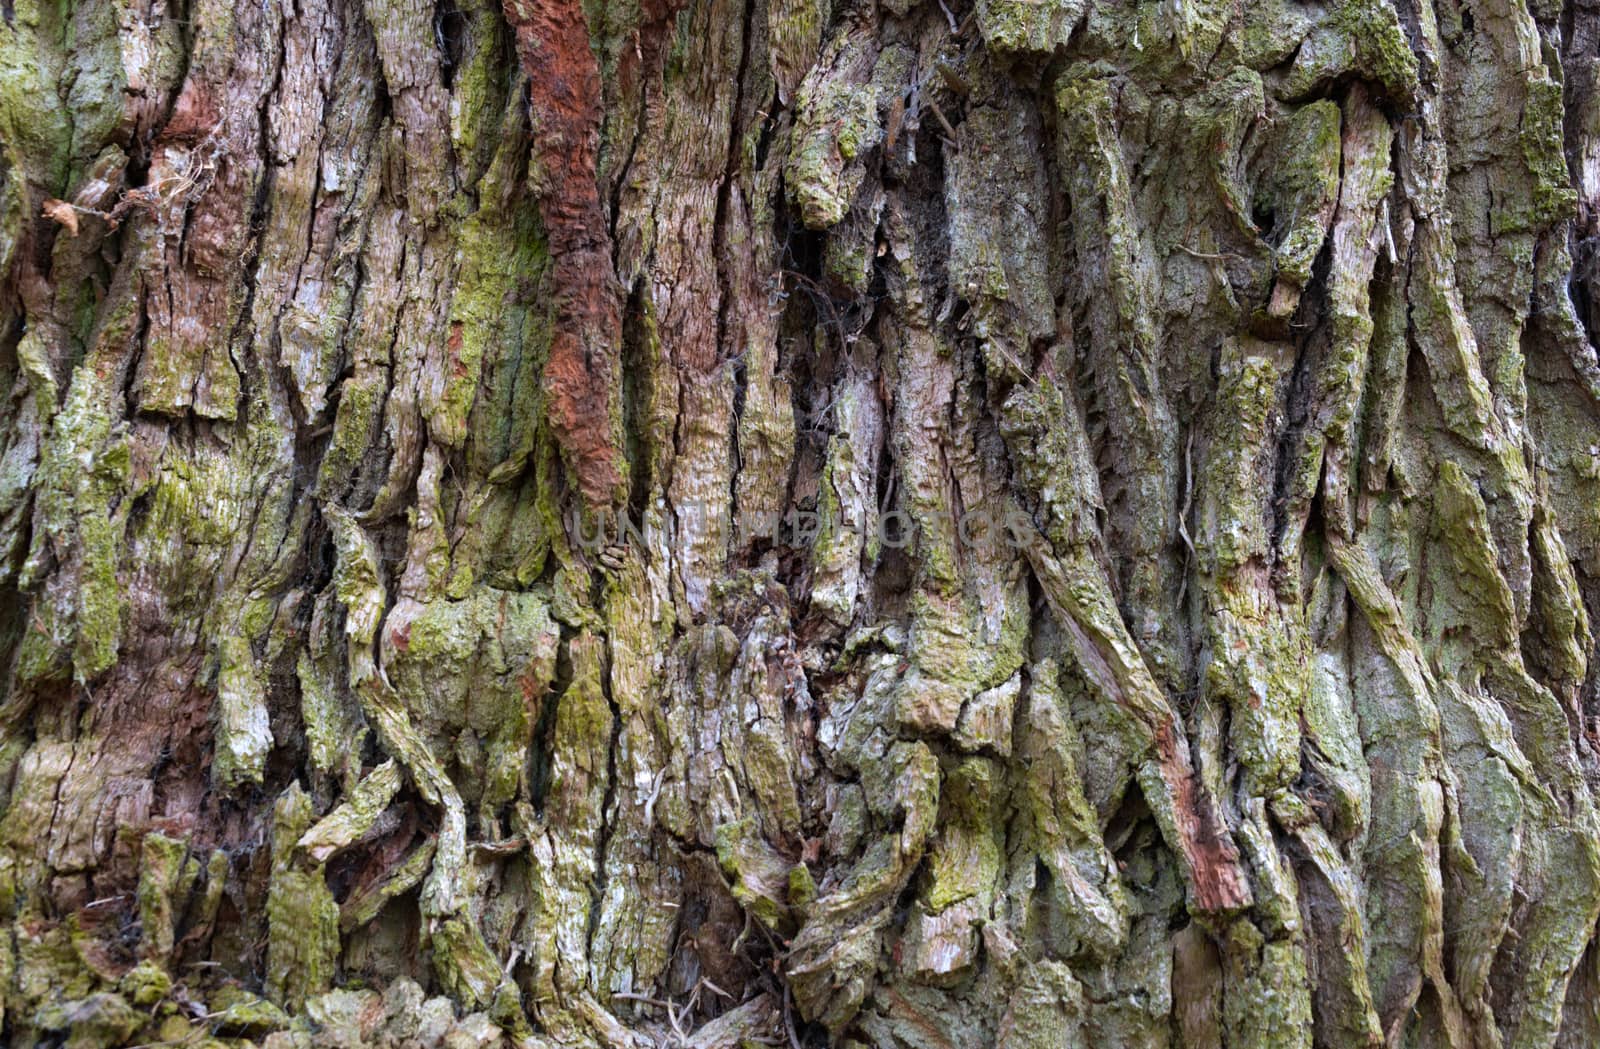 Tree Bark Pattern